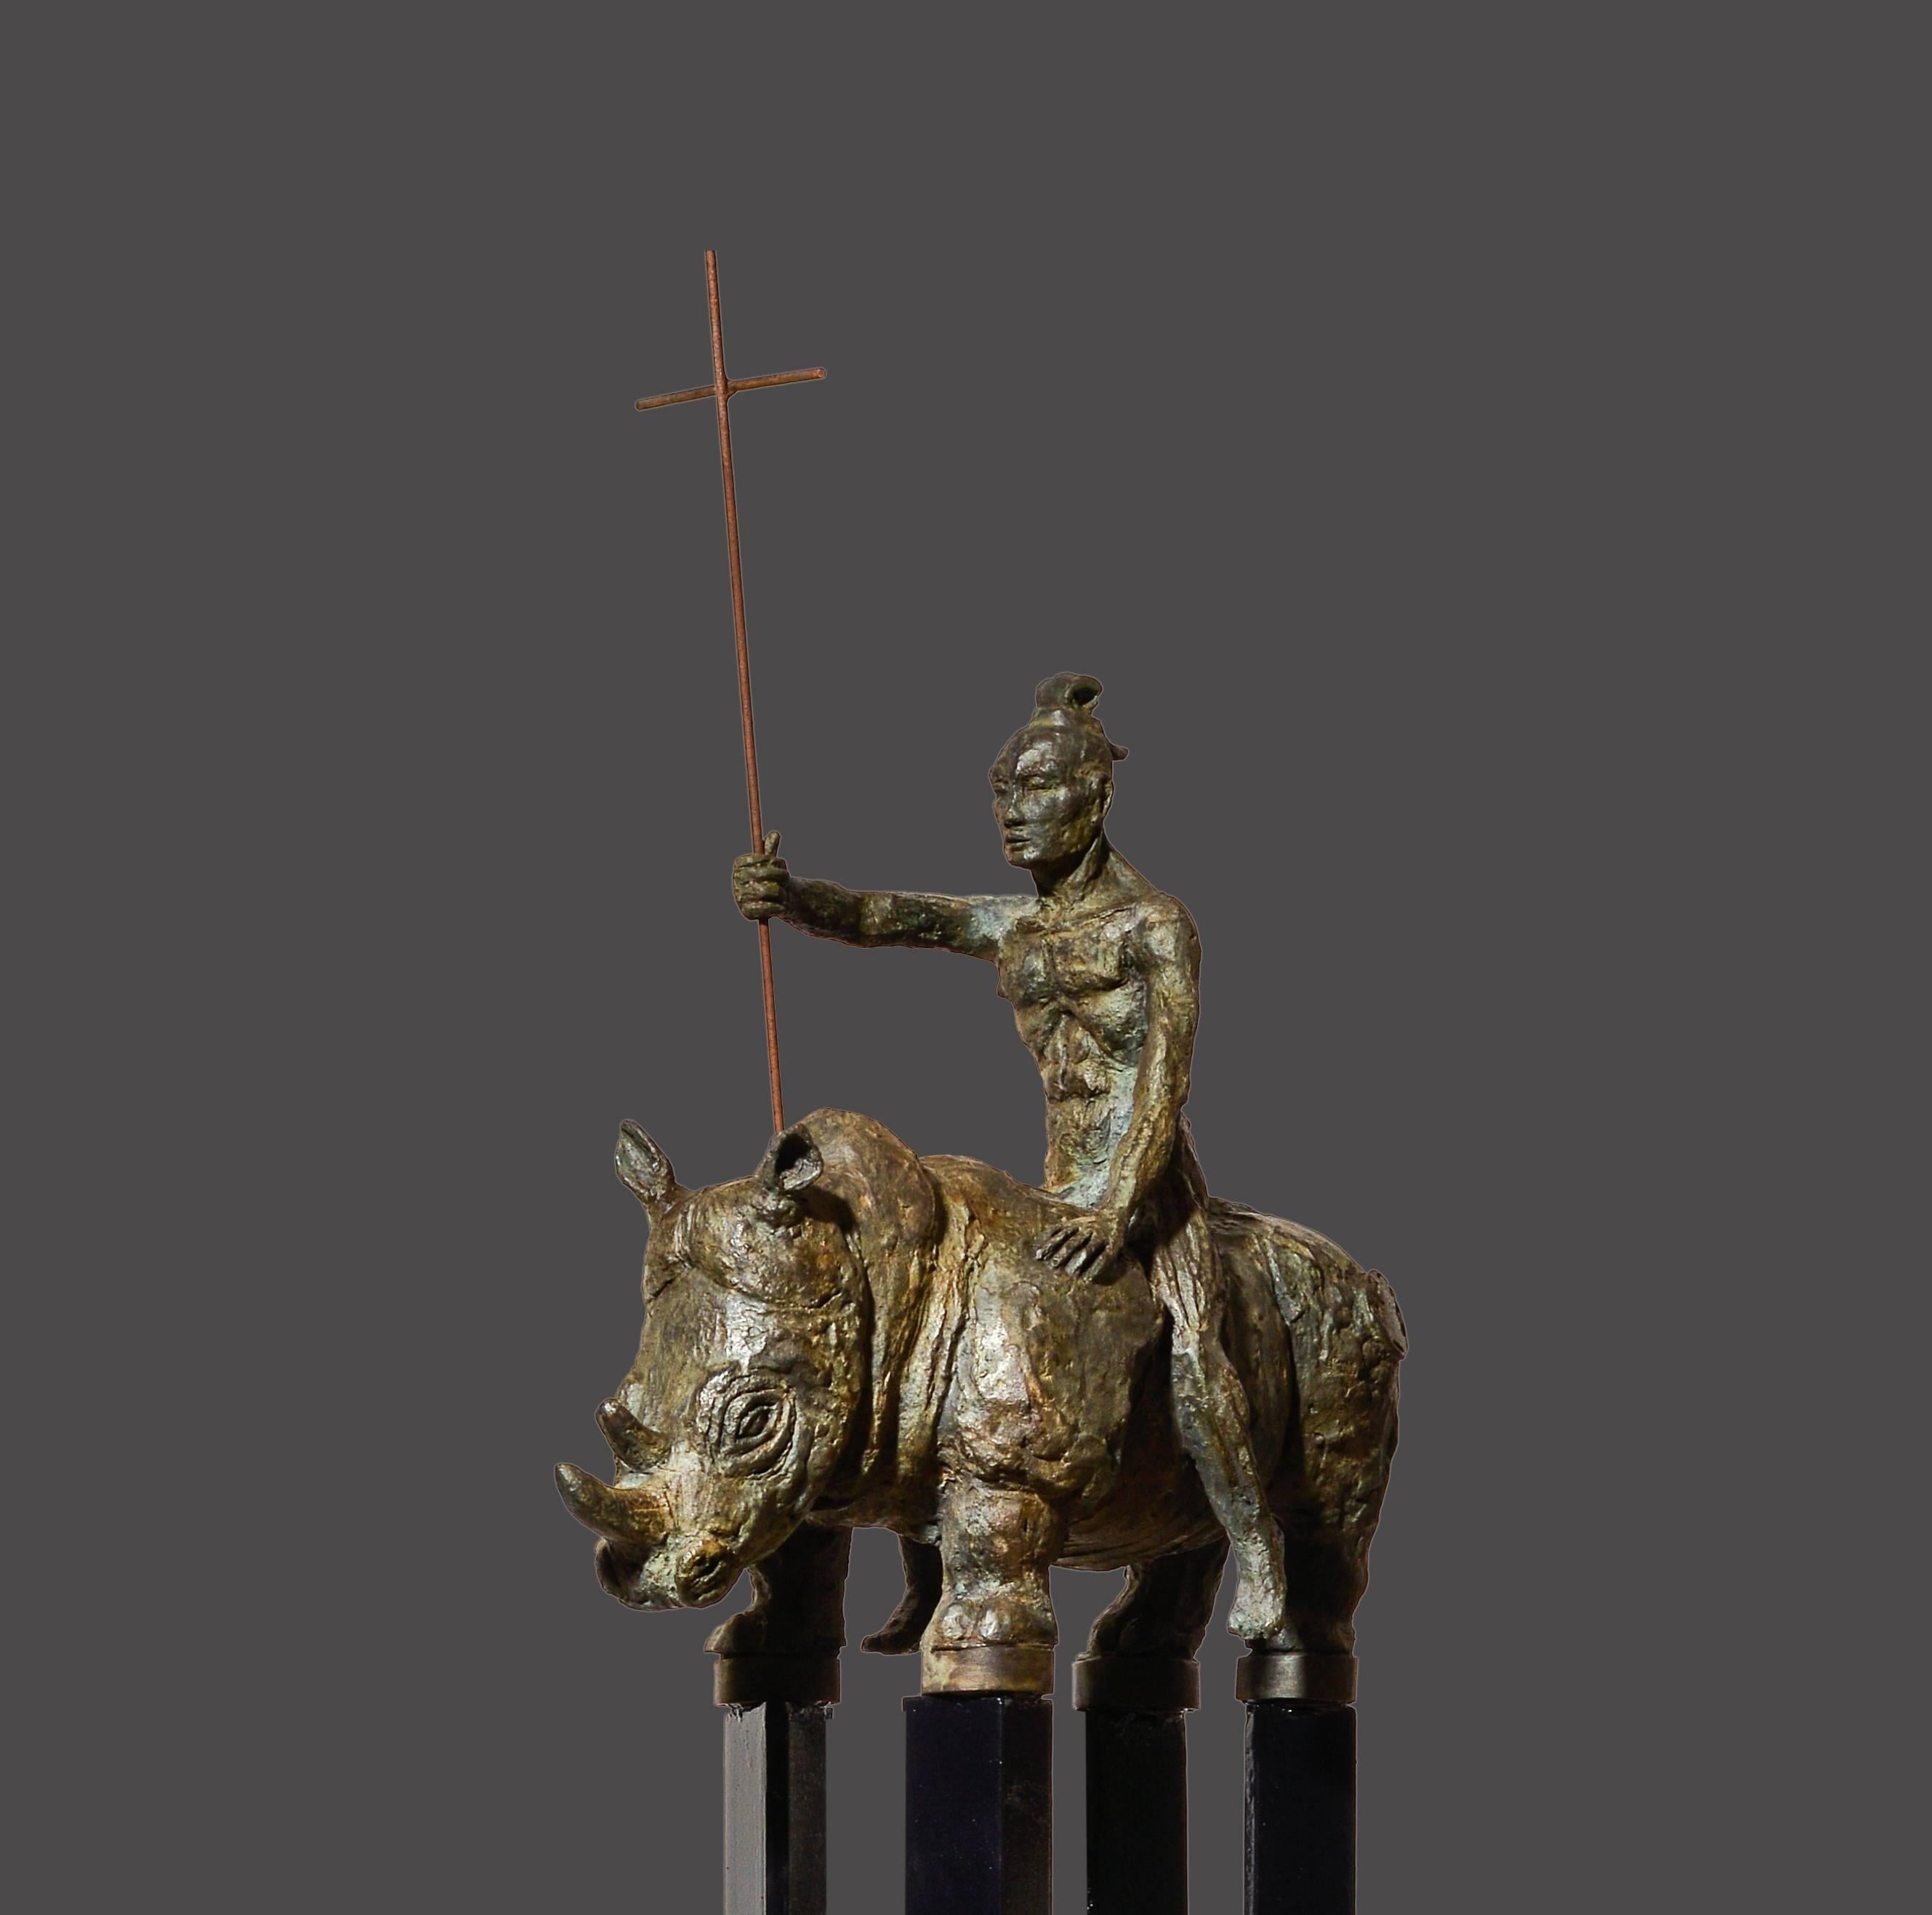 Seven Samurais - Rhino Contemporary Bronze Collection - Gold Figurative Sculpture by Mariko